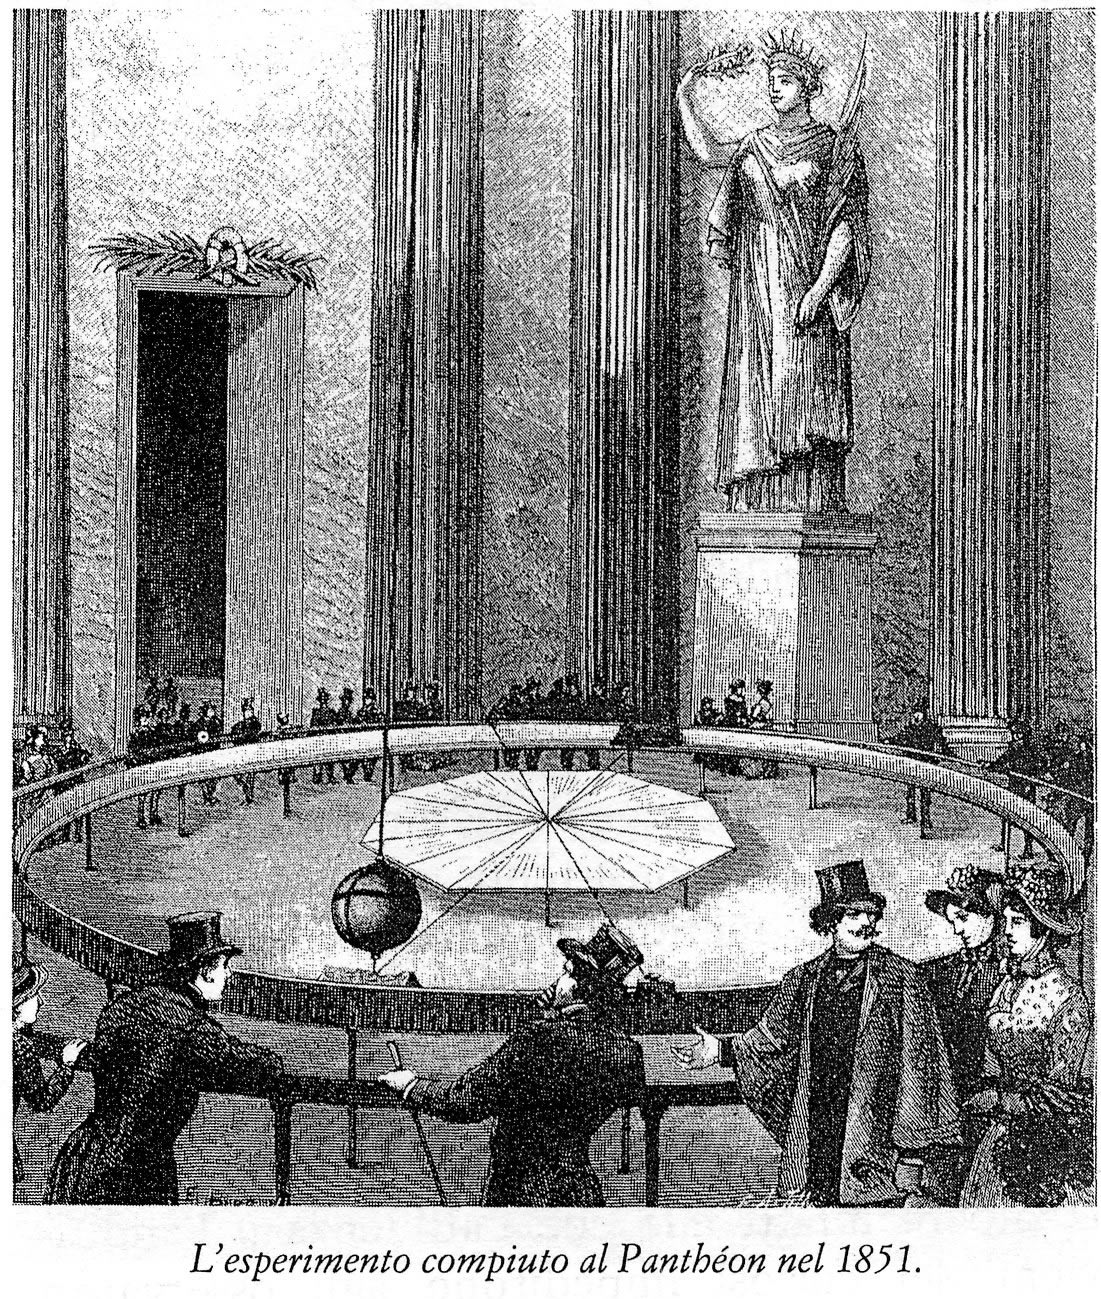 penolo Pantheon 1851